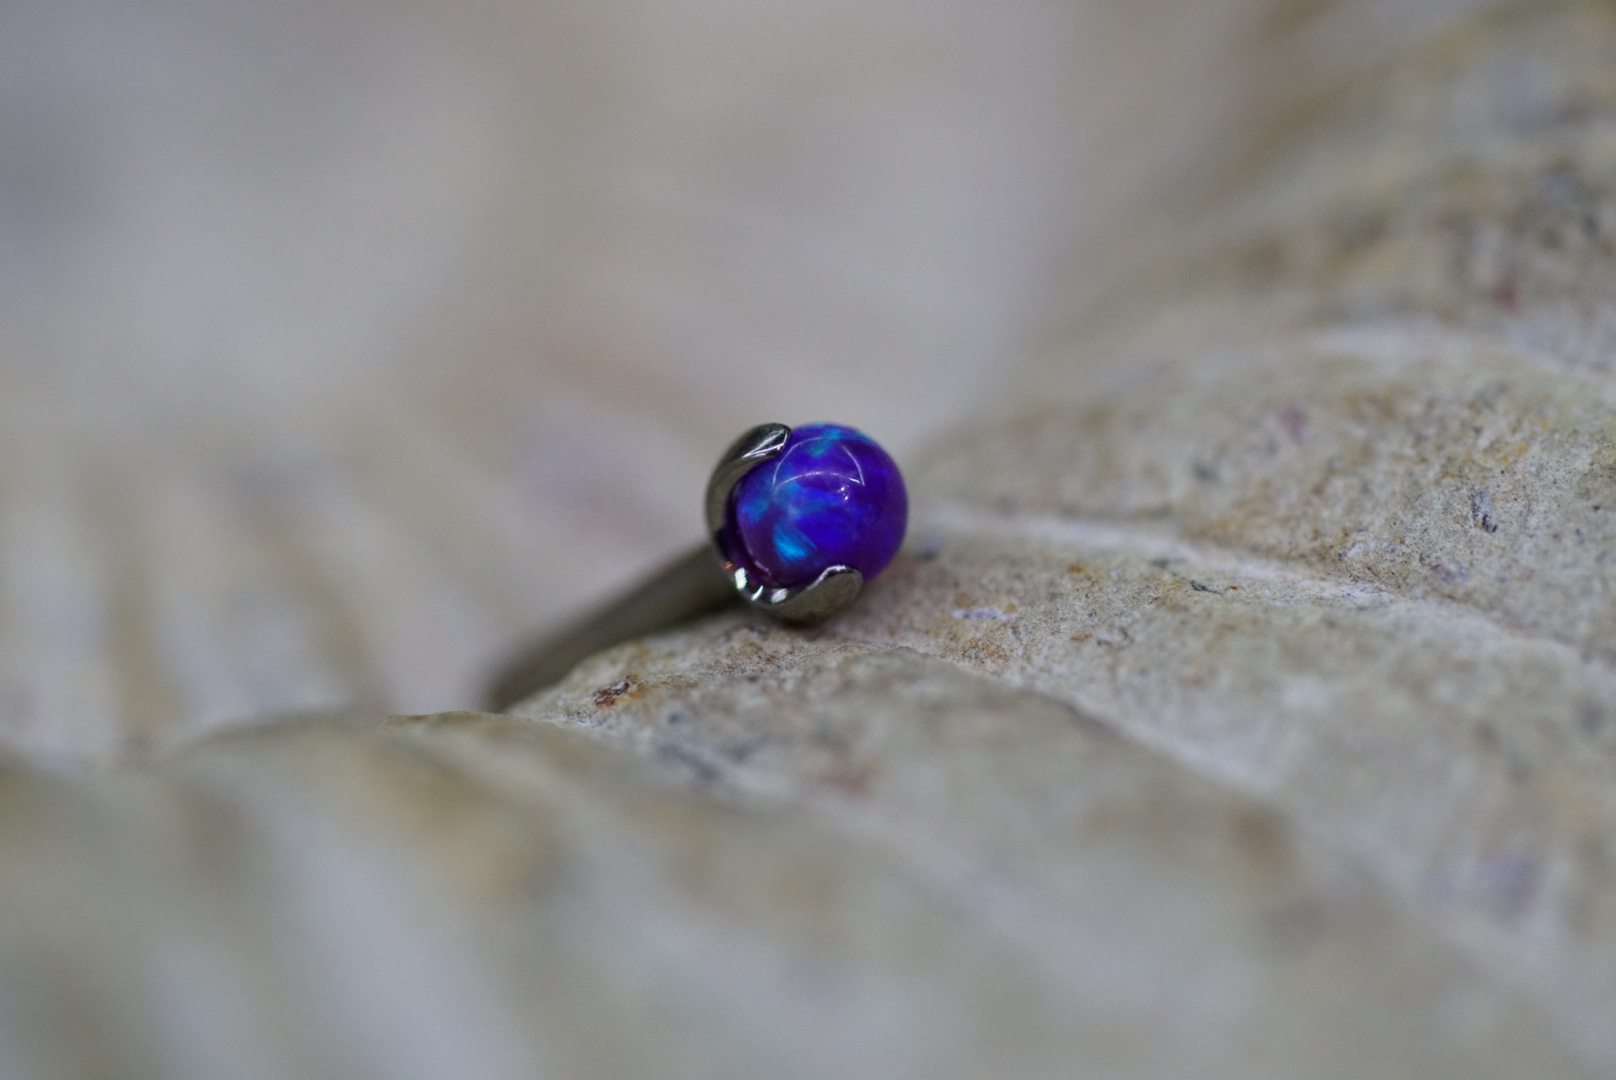 3mm Claw Prong Ball (Option: 18g/16g threaded purple opal)